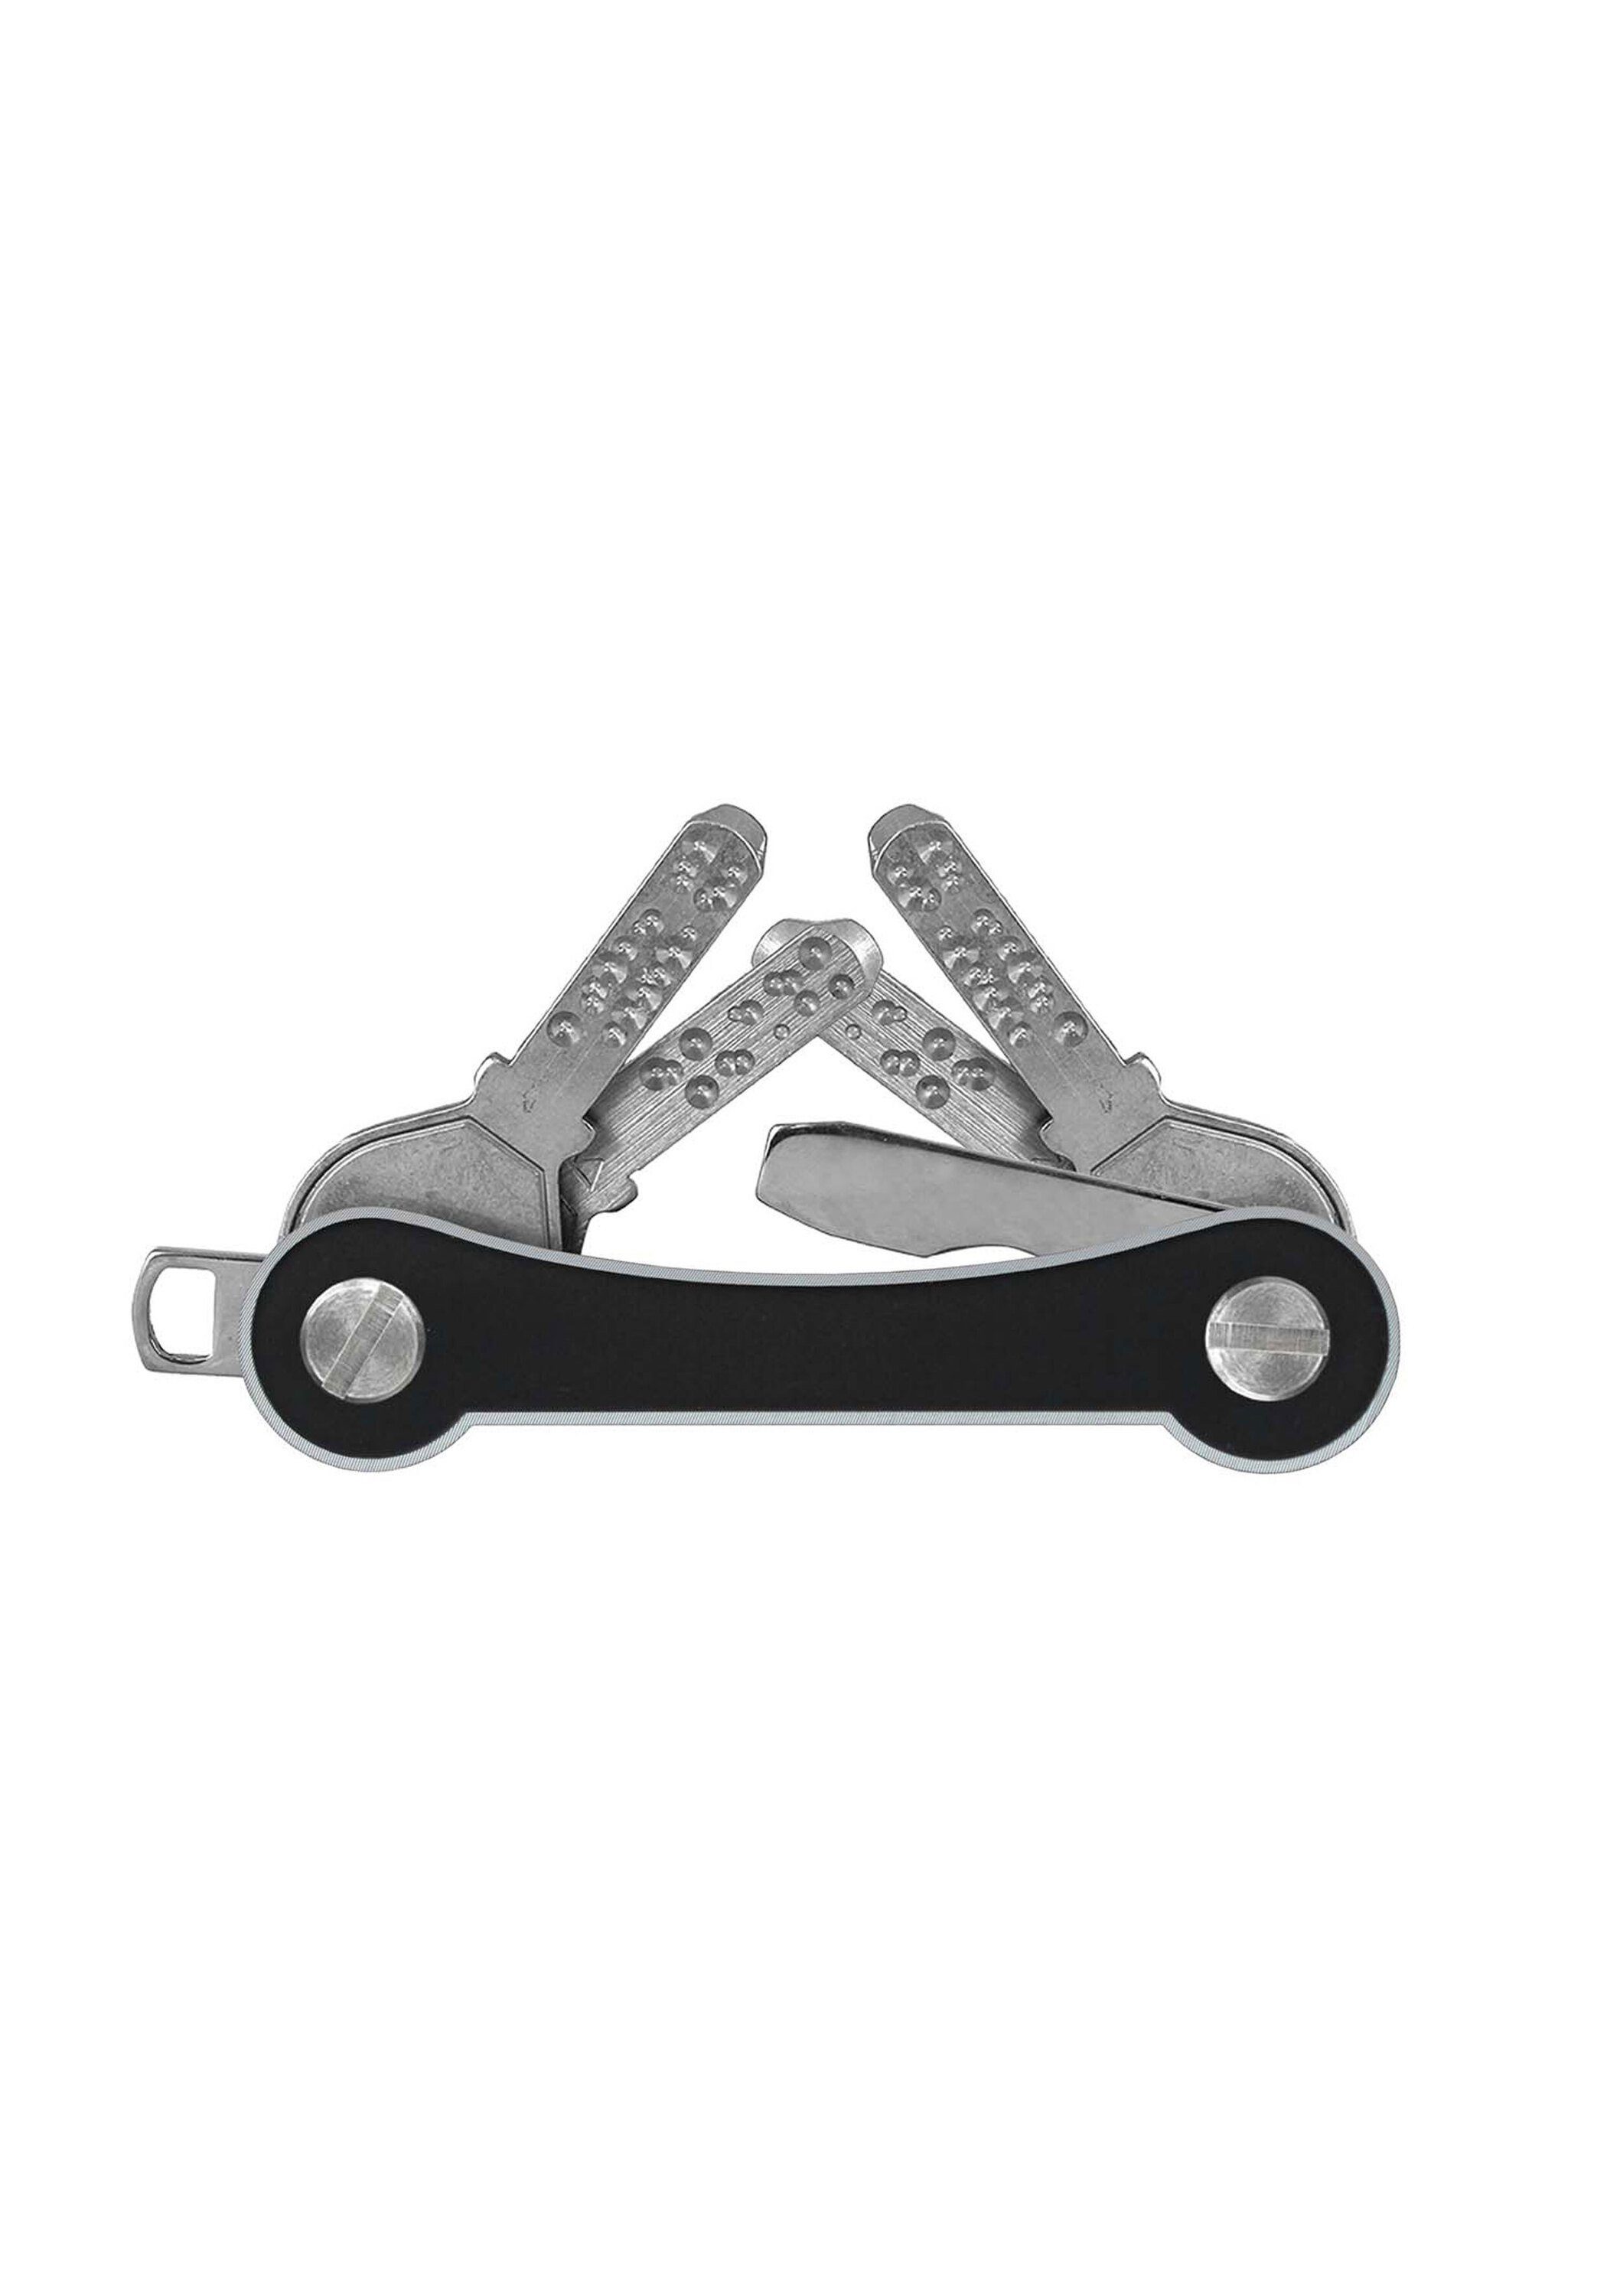 keycabins Schlüsselanhänger frame, Aluminium schwarz SWISS Made